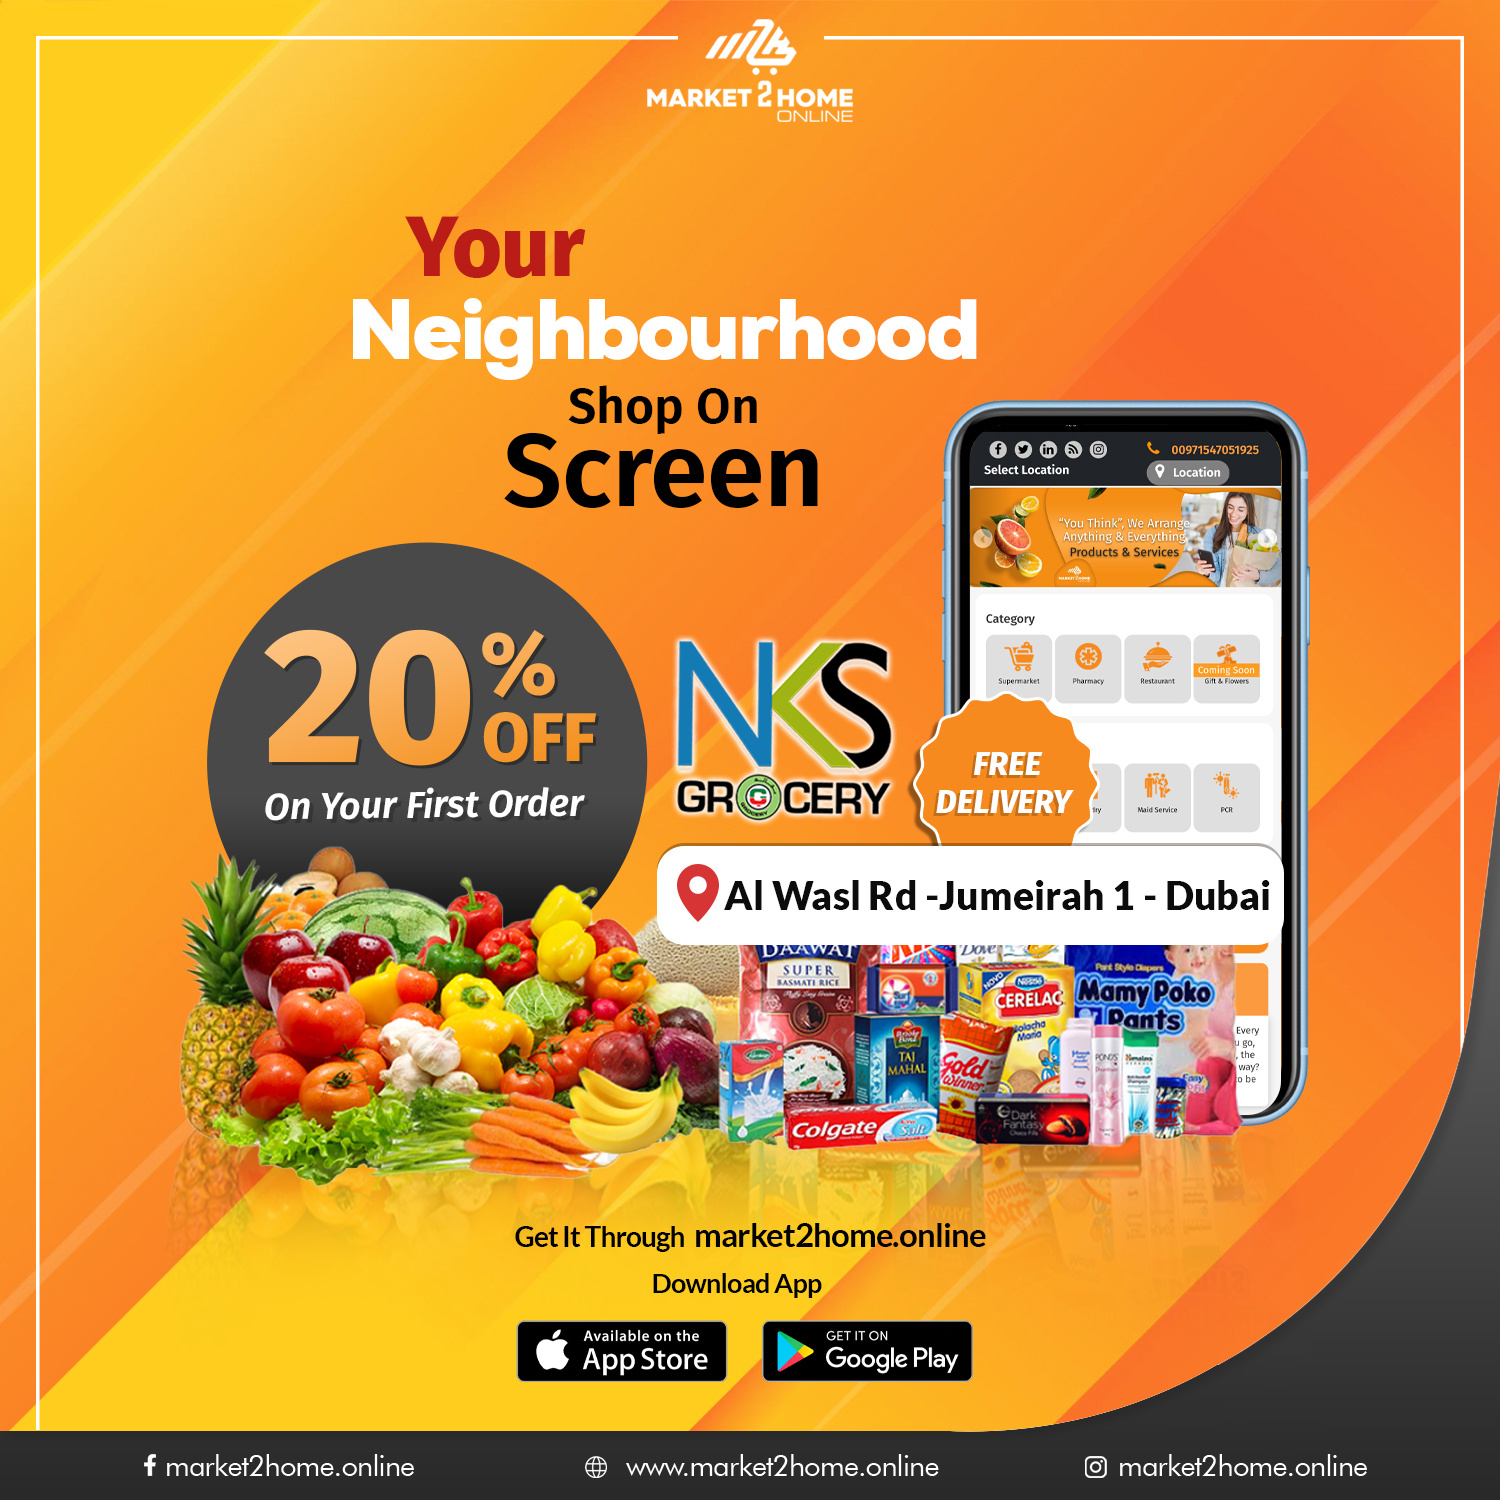 Best Online Supermarket in Dubai by market 2home on Dribbble